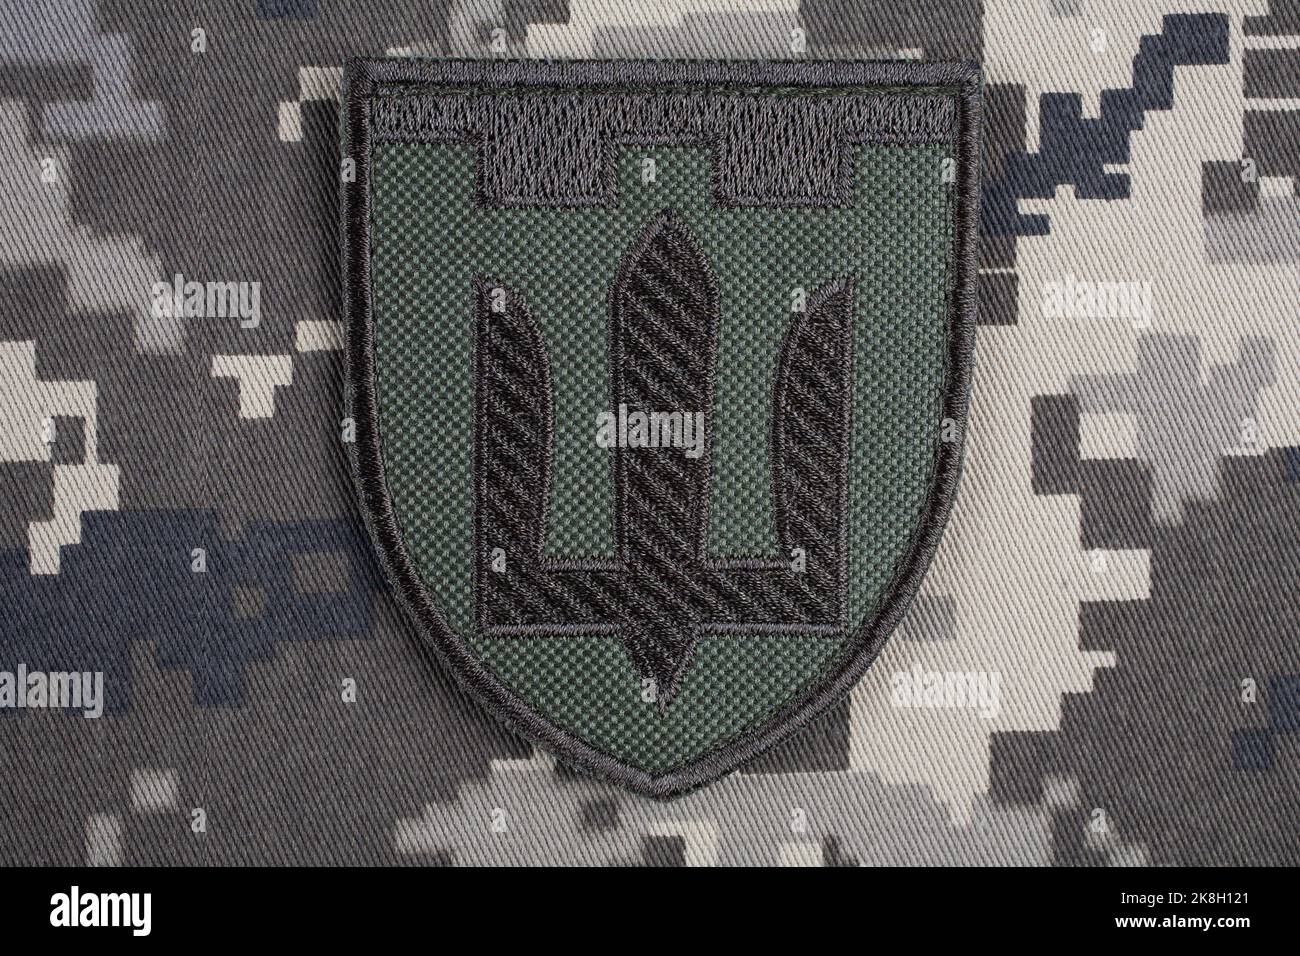 KYIV, UKRAINE - October 6, 2022. Russian invasion in Ukraine 2022. Territorial Defence Forces of Ukraine uniform insignia badge on camouflaged uniform Stock Photo